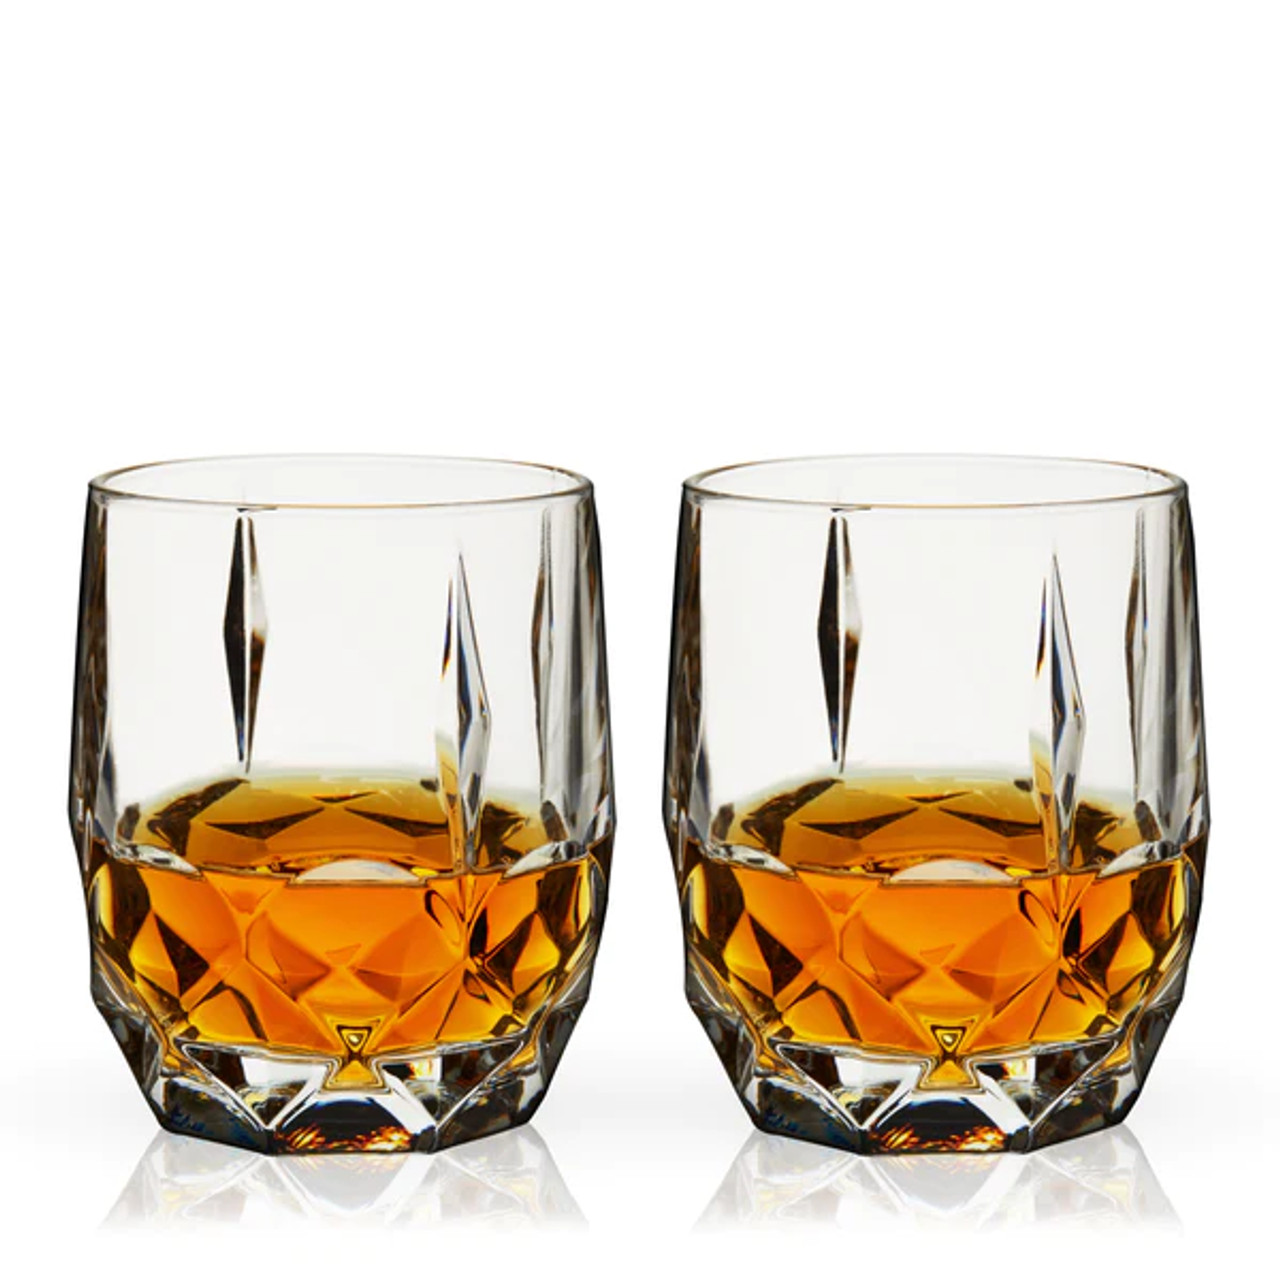 Reserve European Cocktail Glasses by Viski